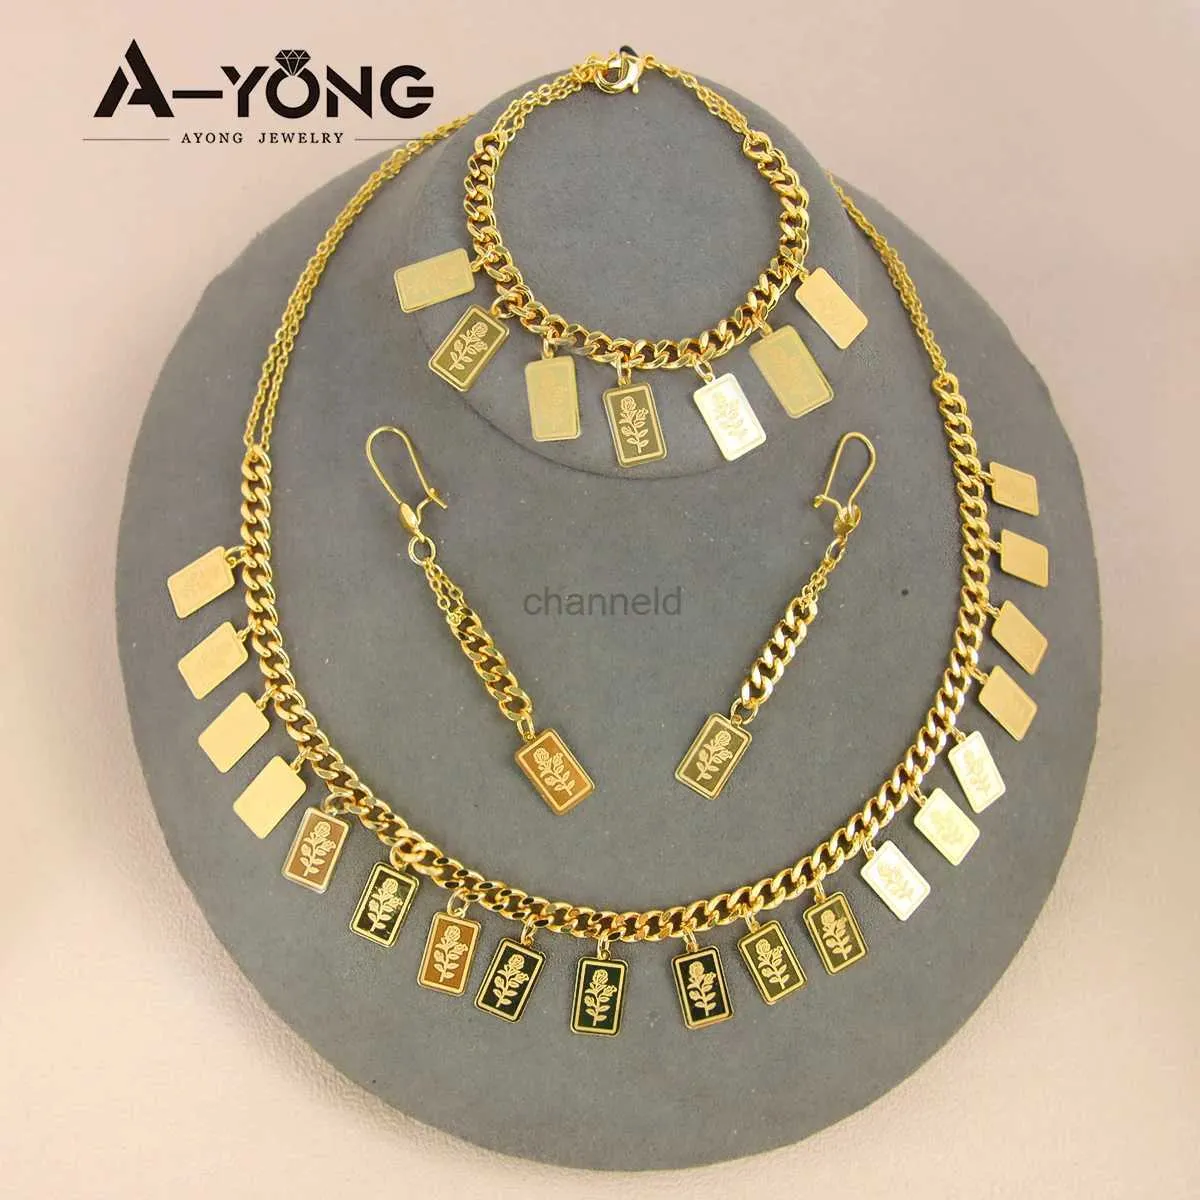 Bangle Ayong Arab Wedding Necklace Set 21k Gold Plated Turkish Mellanöstern Dubai Etiopiska afrikanska vintage stil smyckesuppsättningar 240319